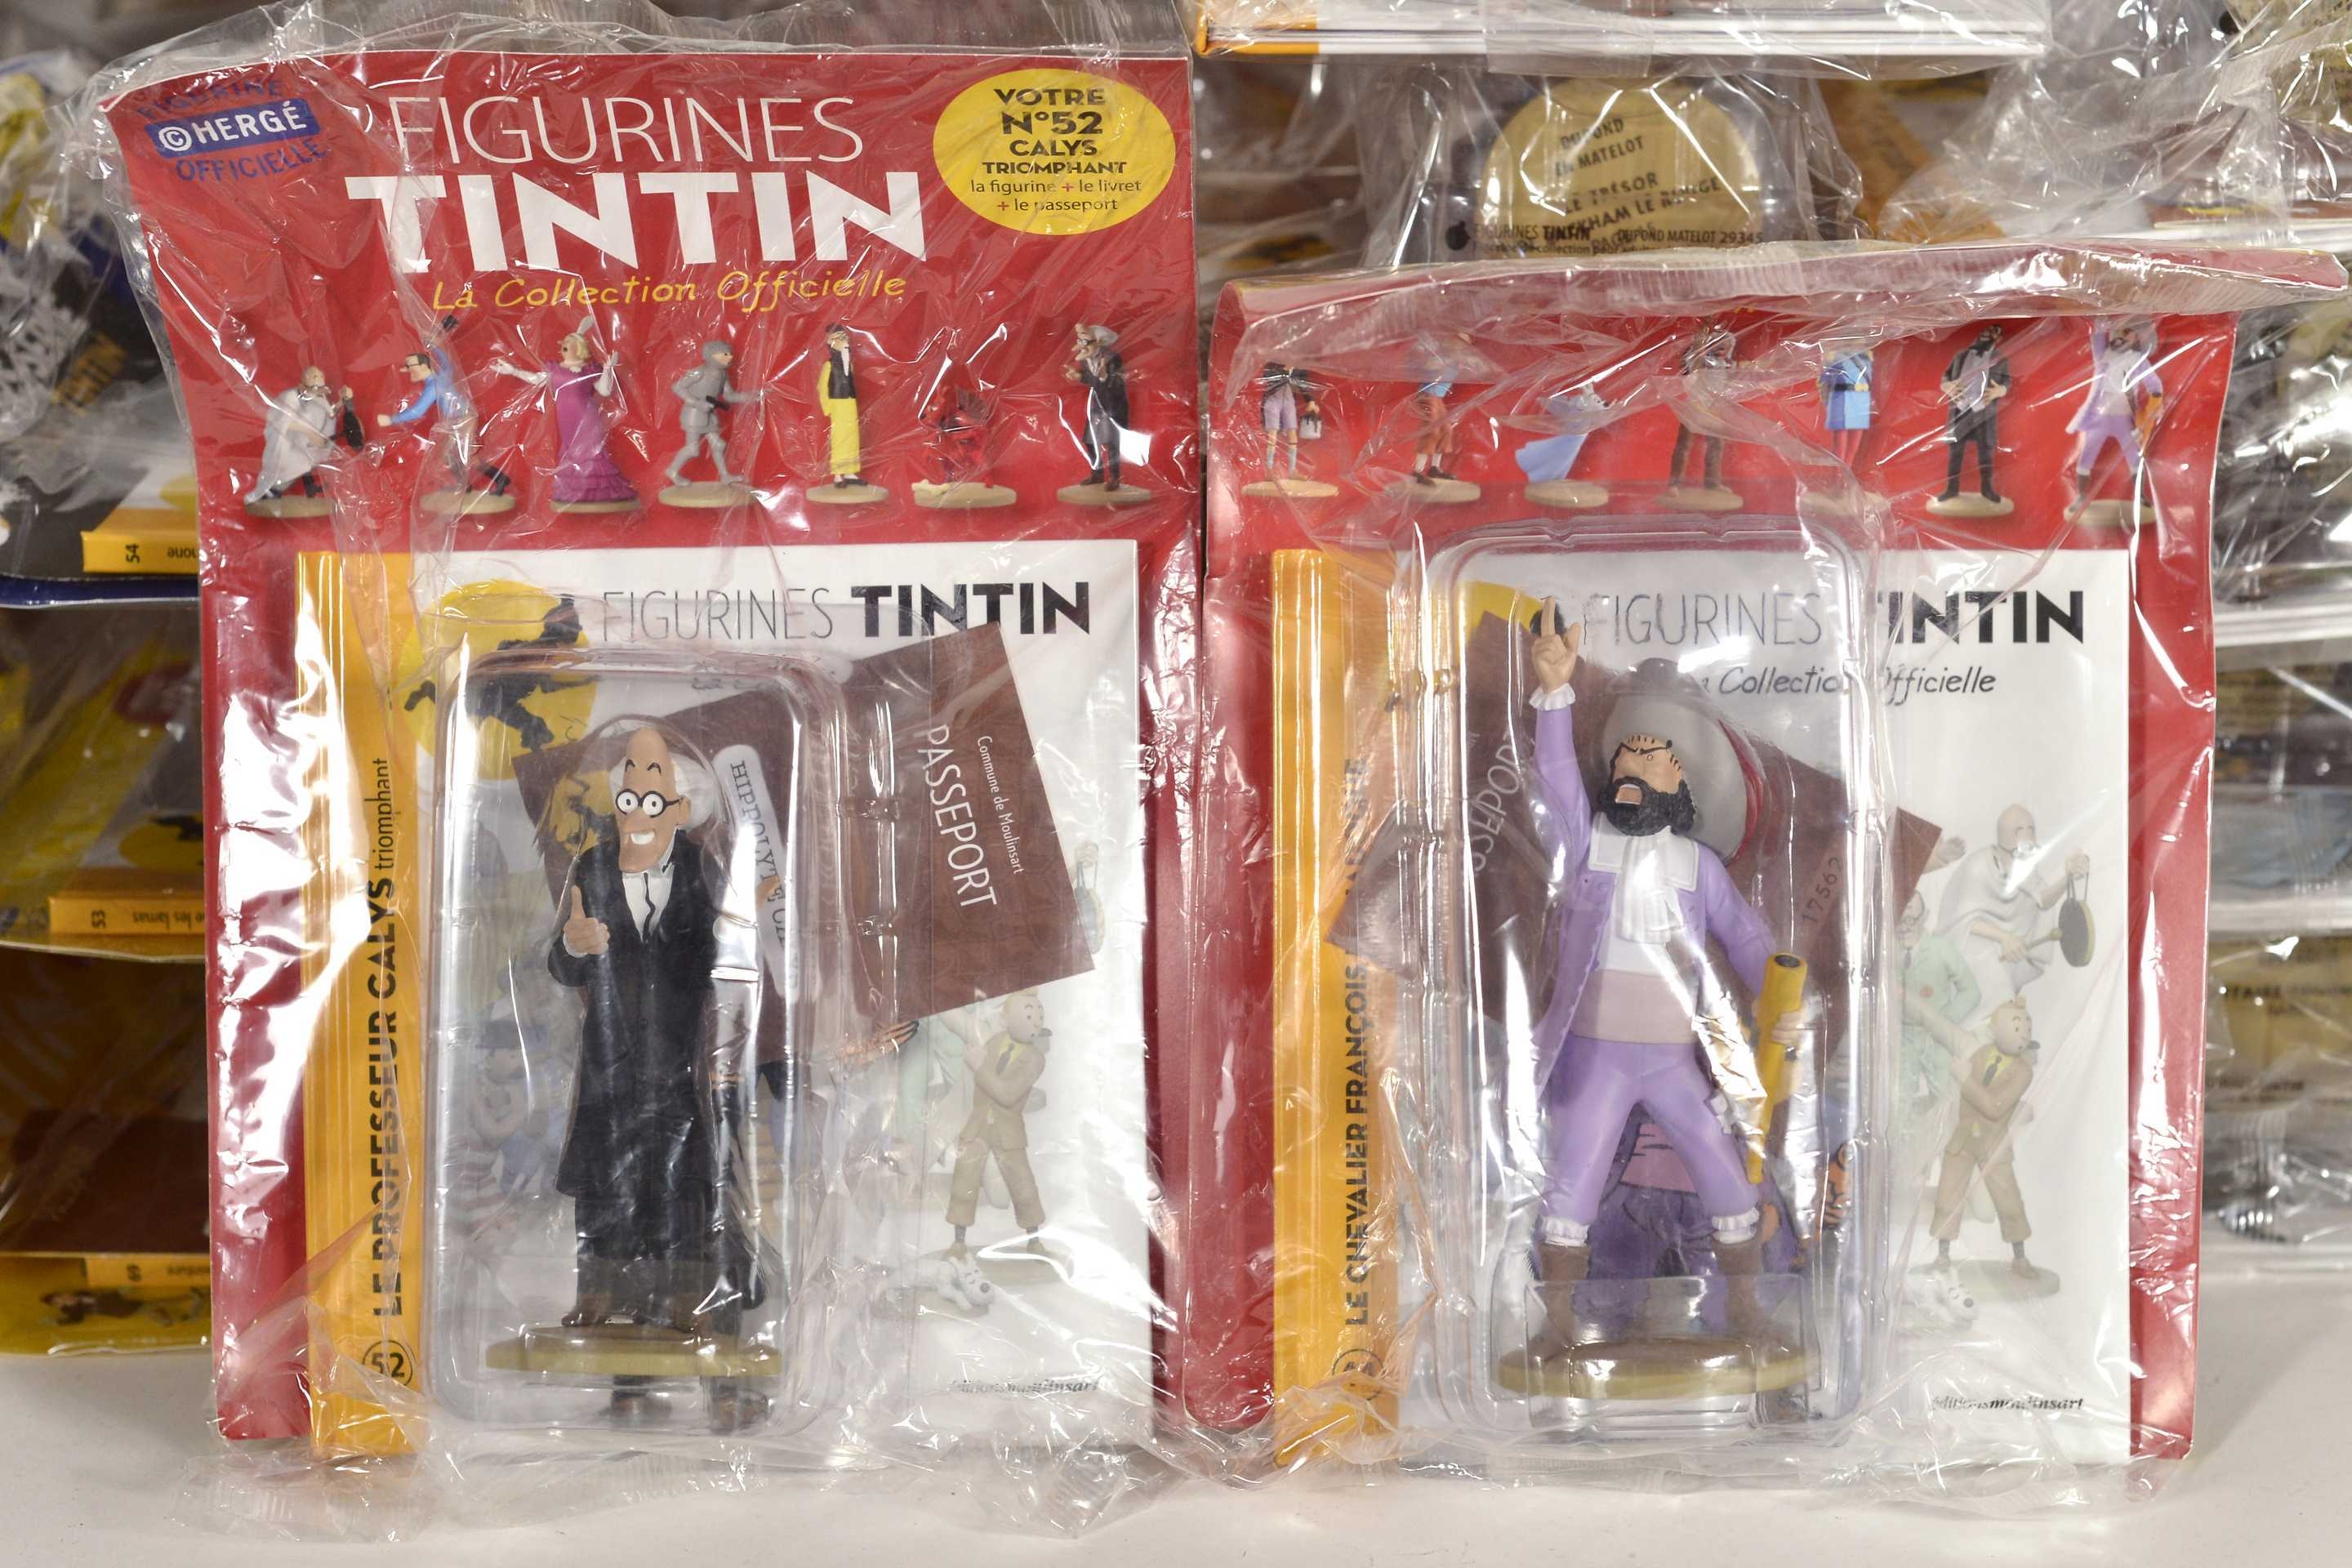 Le Mans : une importante collection de figurines Tintin sera